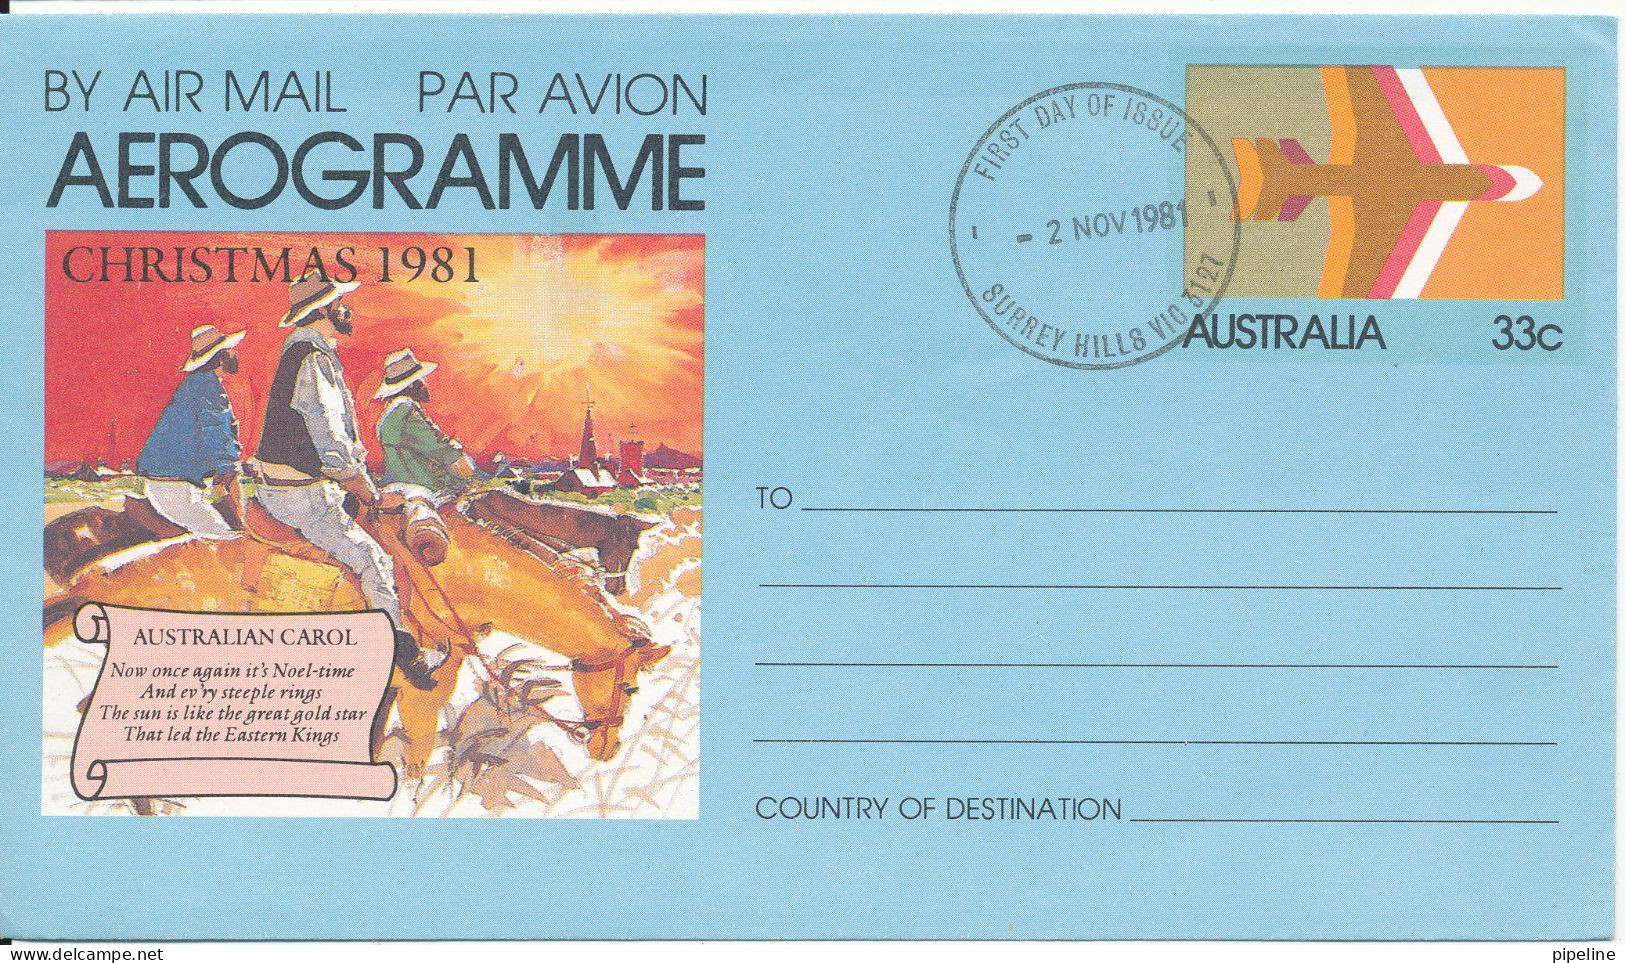 Australia Aerogramme FDC CHRISTMAS 1981 2-11-1981 Nice Christmas Cachet - Aerograms